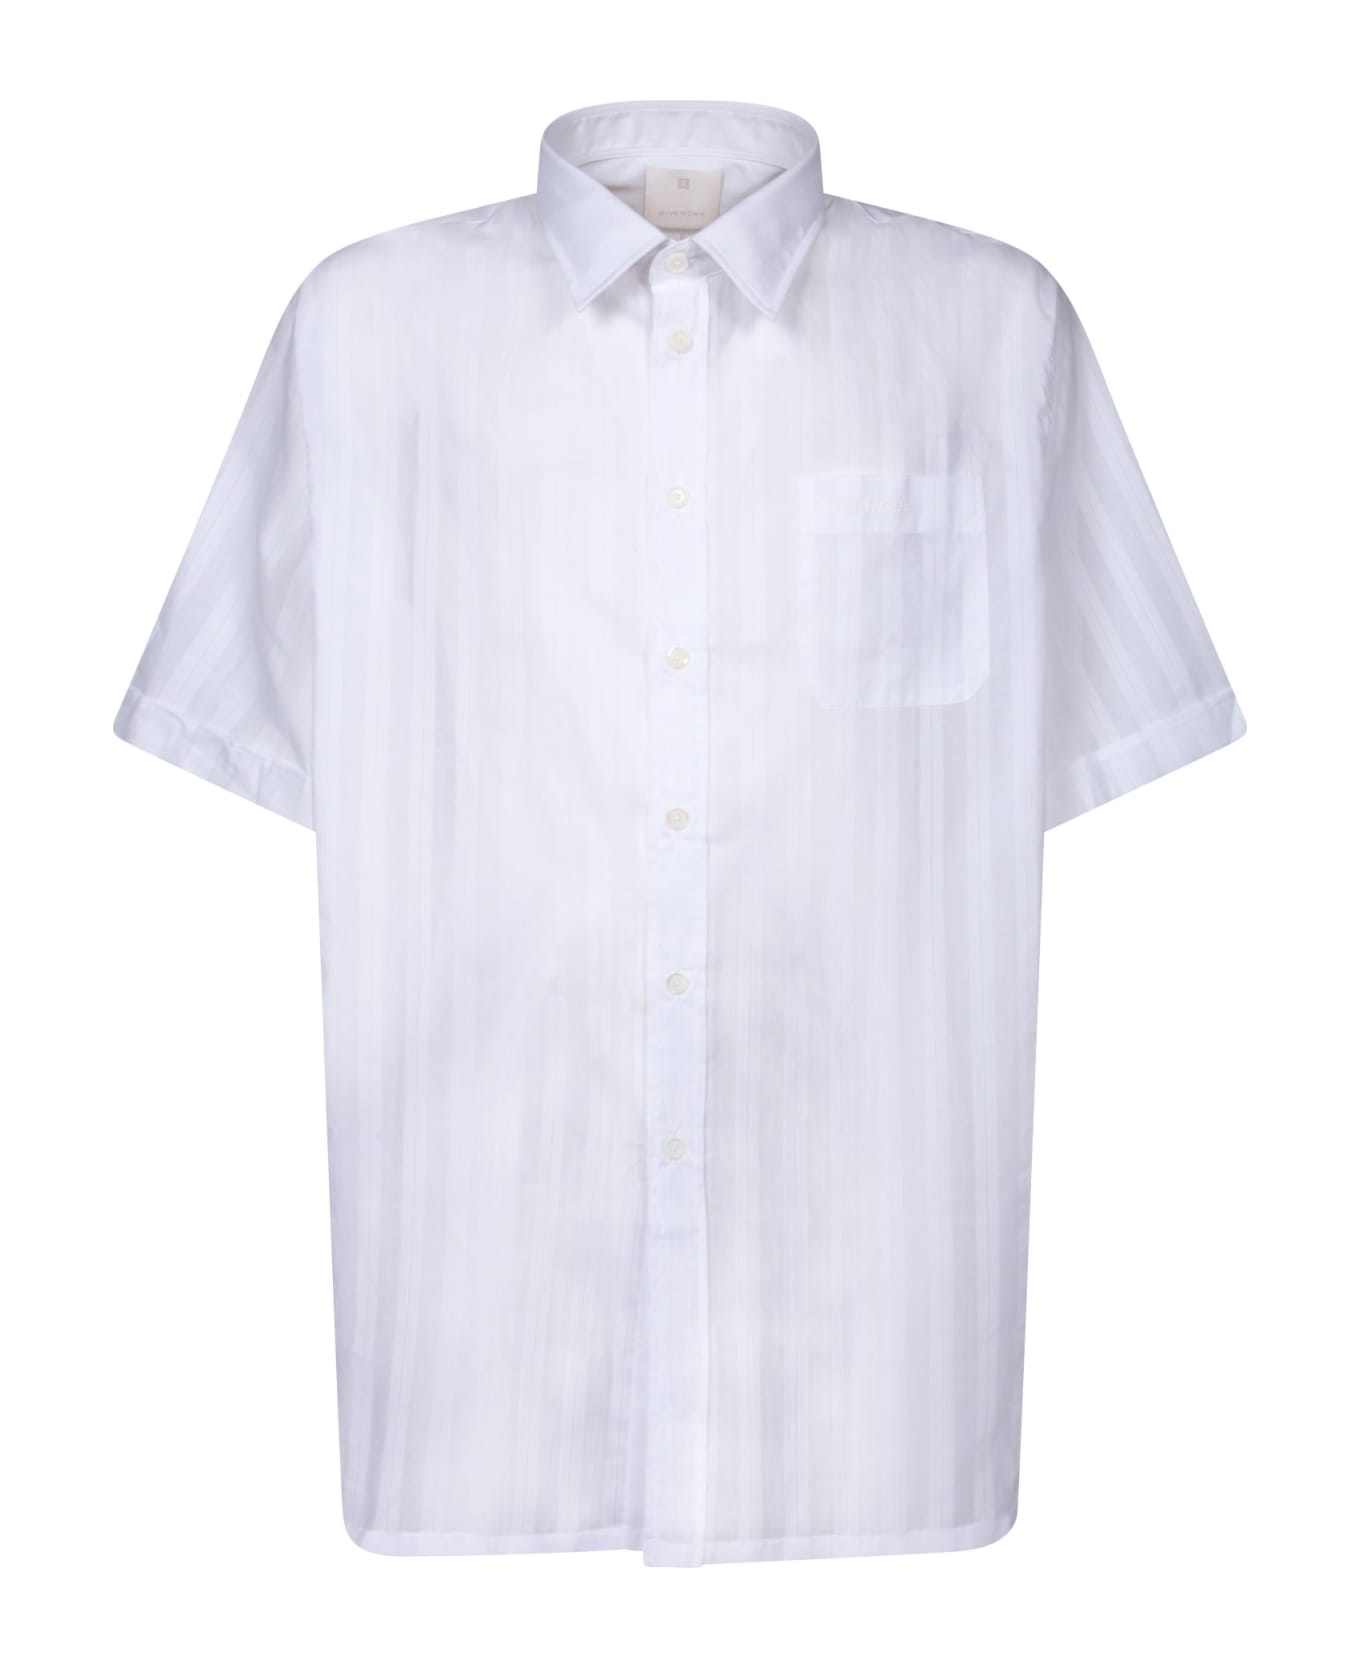 Givenchy Short Sleeves White Shirt - White